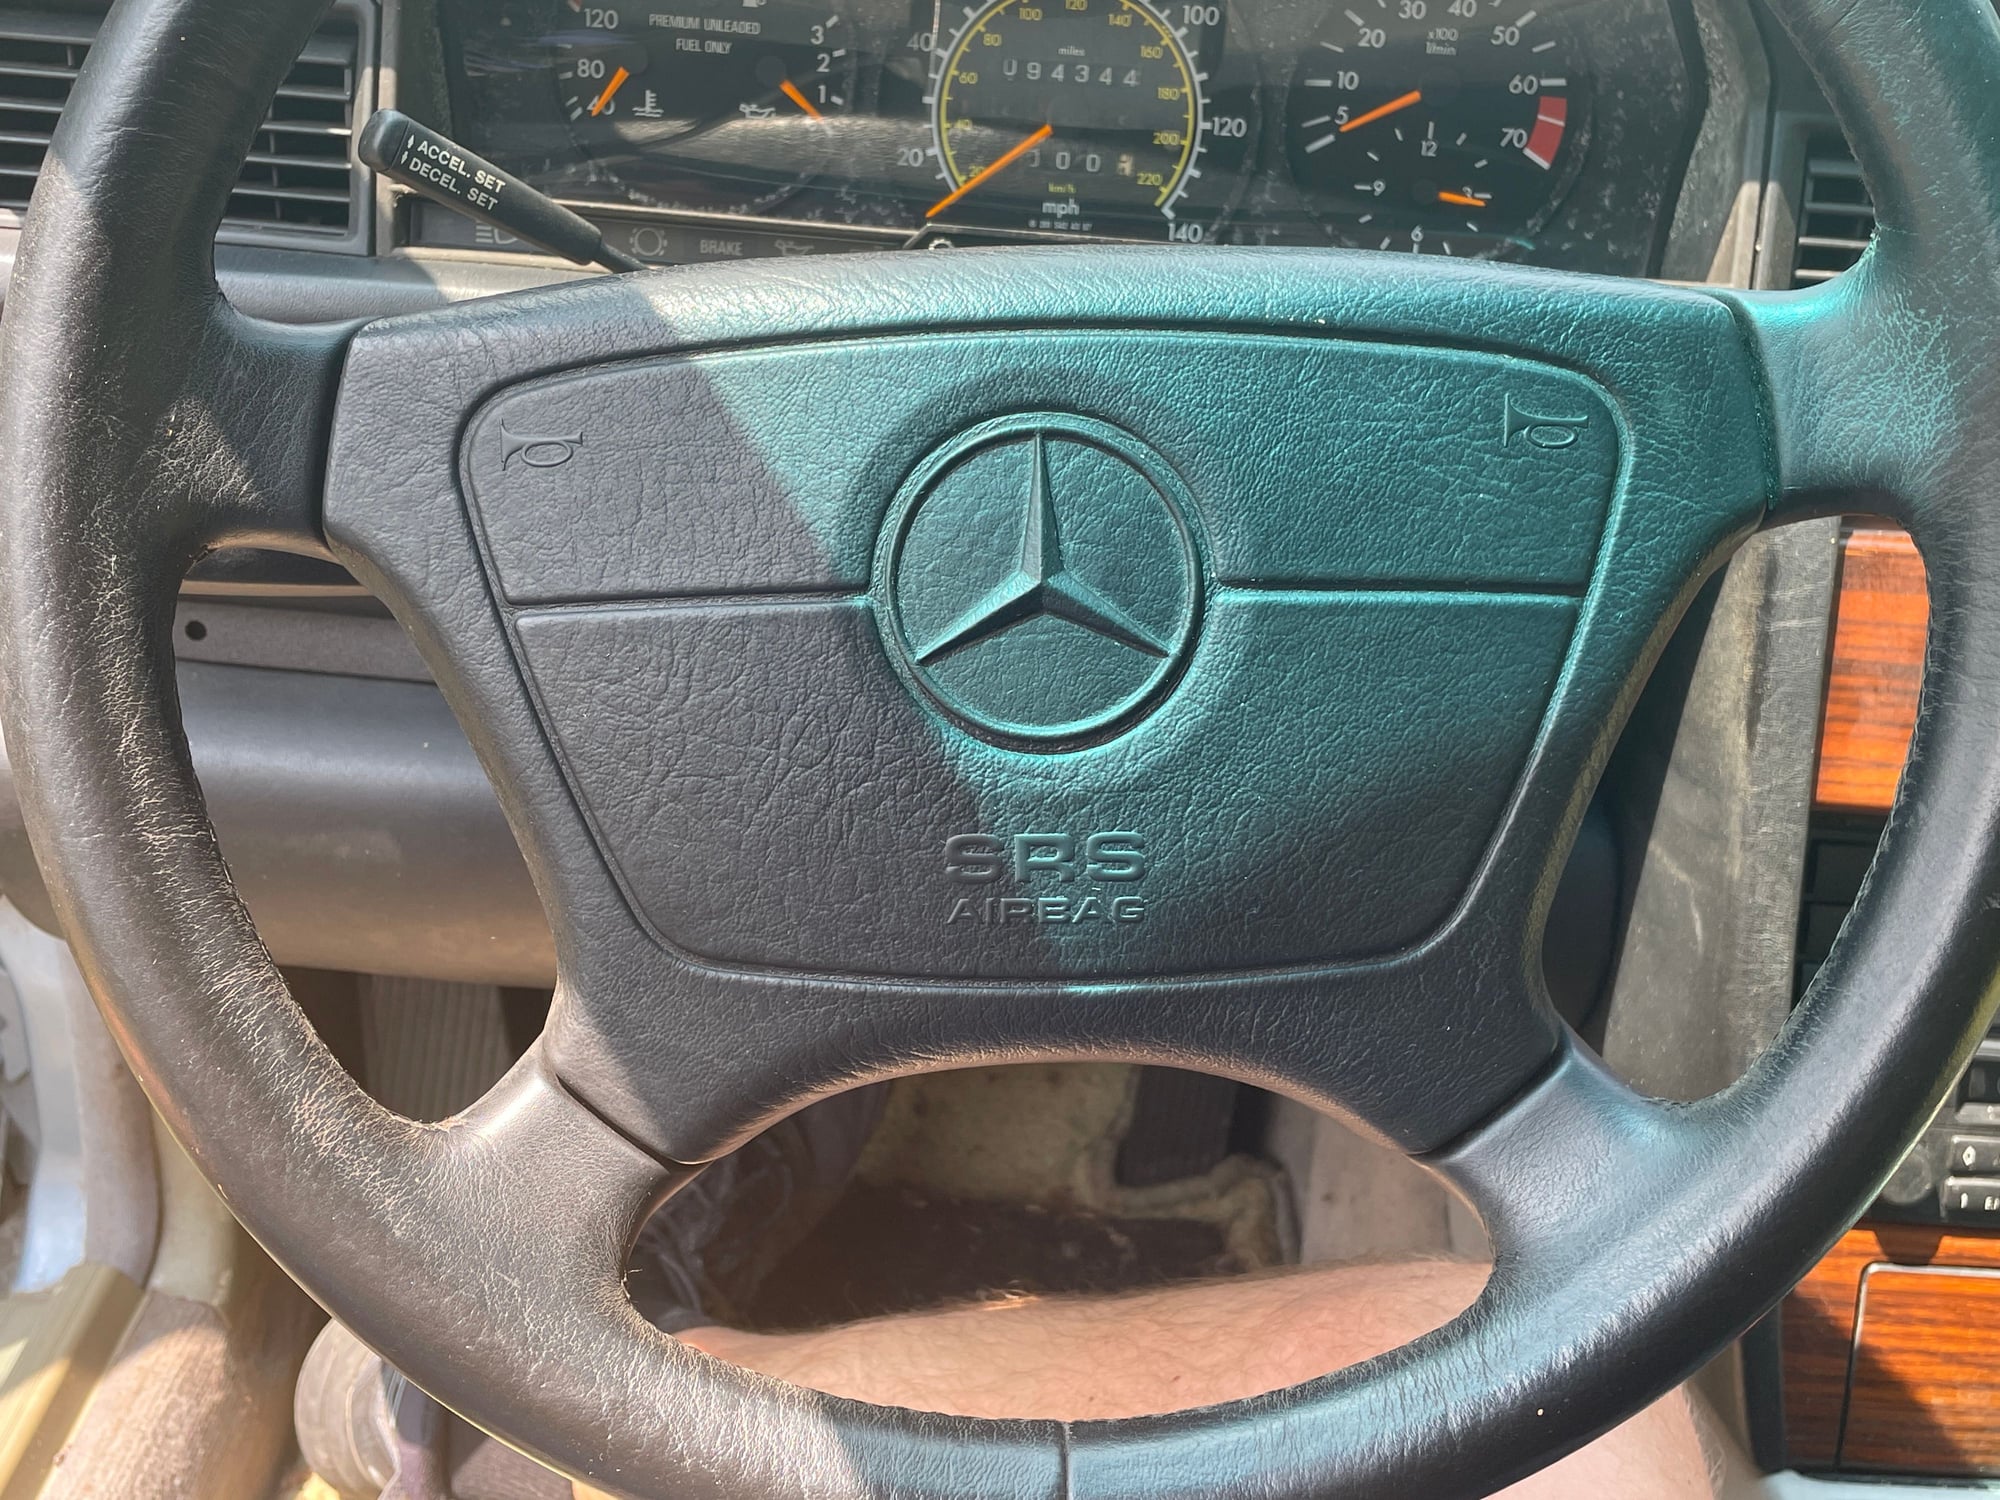 1993 Mercedes-Benz 190E - 1993 190E 2.6 | Sportline | Final Production Year - Used - VIN WDBDA29DXPG013337 - 94,000 Miles - 6 cyl - 2WD - Automatic - Sedan - Blue - Greensburg, PA 15601, United States